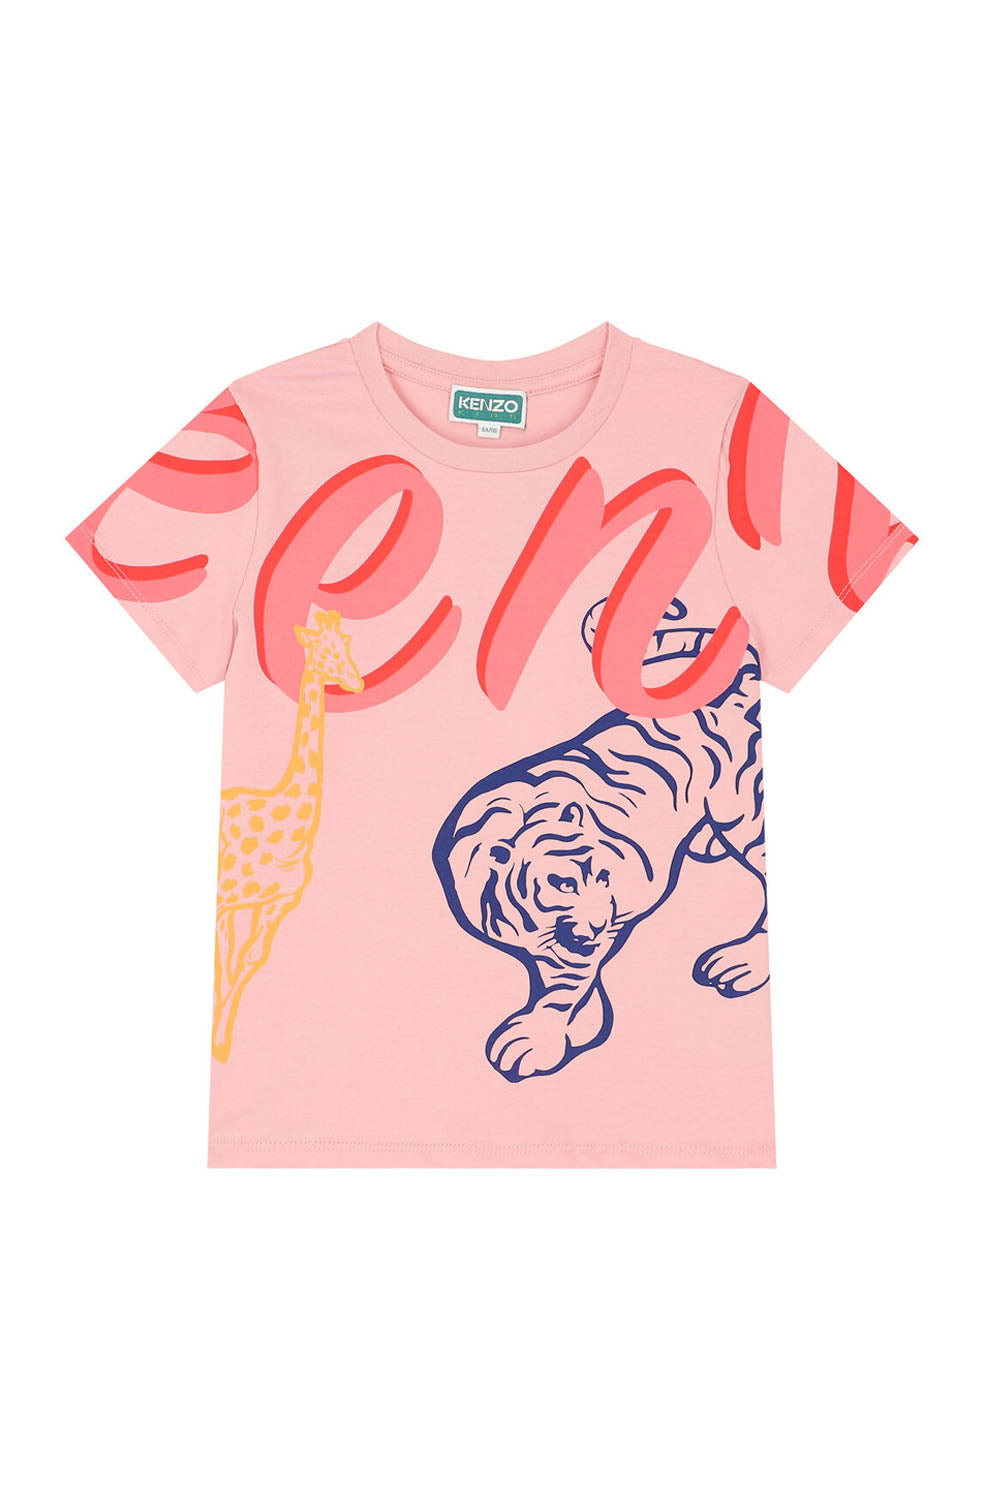 Bamboo Multi-Iconic Print Jersey T-Shirt for Girls Bamboo Multi-Iconic Print Jersey T-Shirt for Girls Maison7